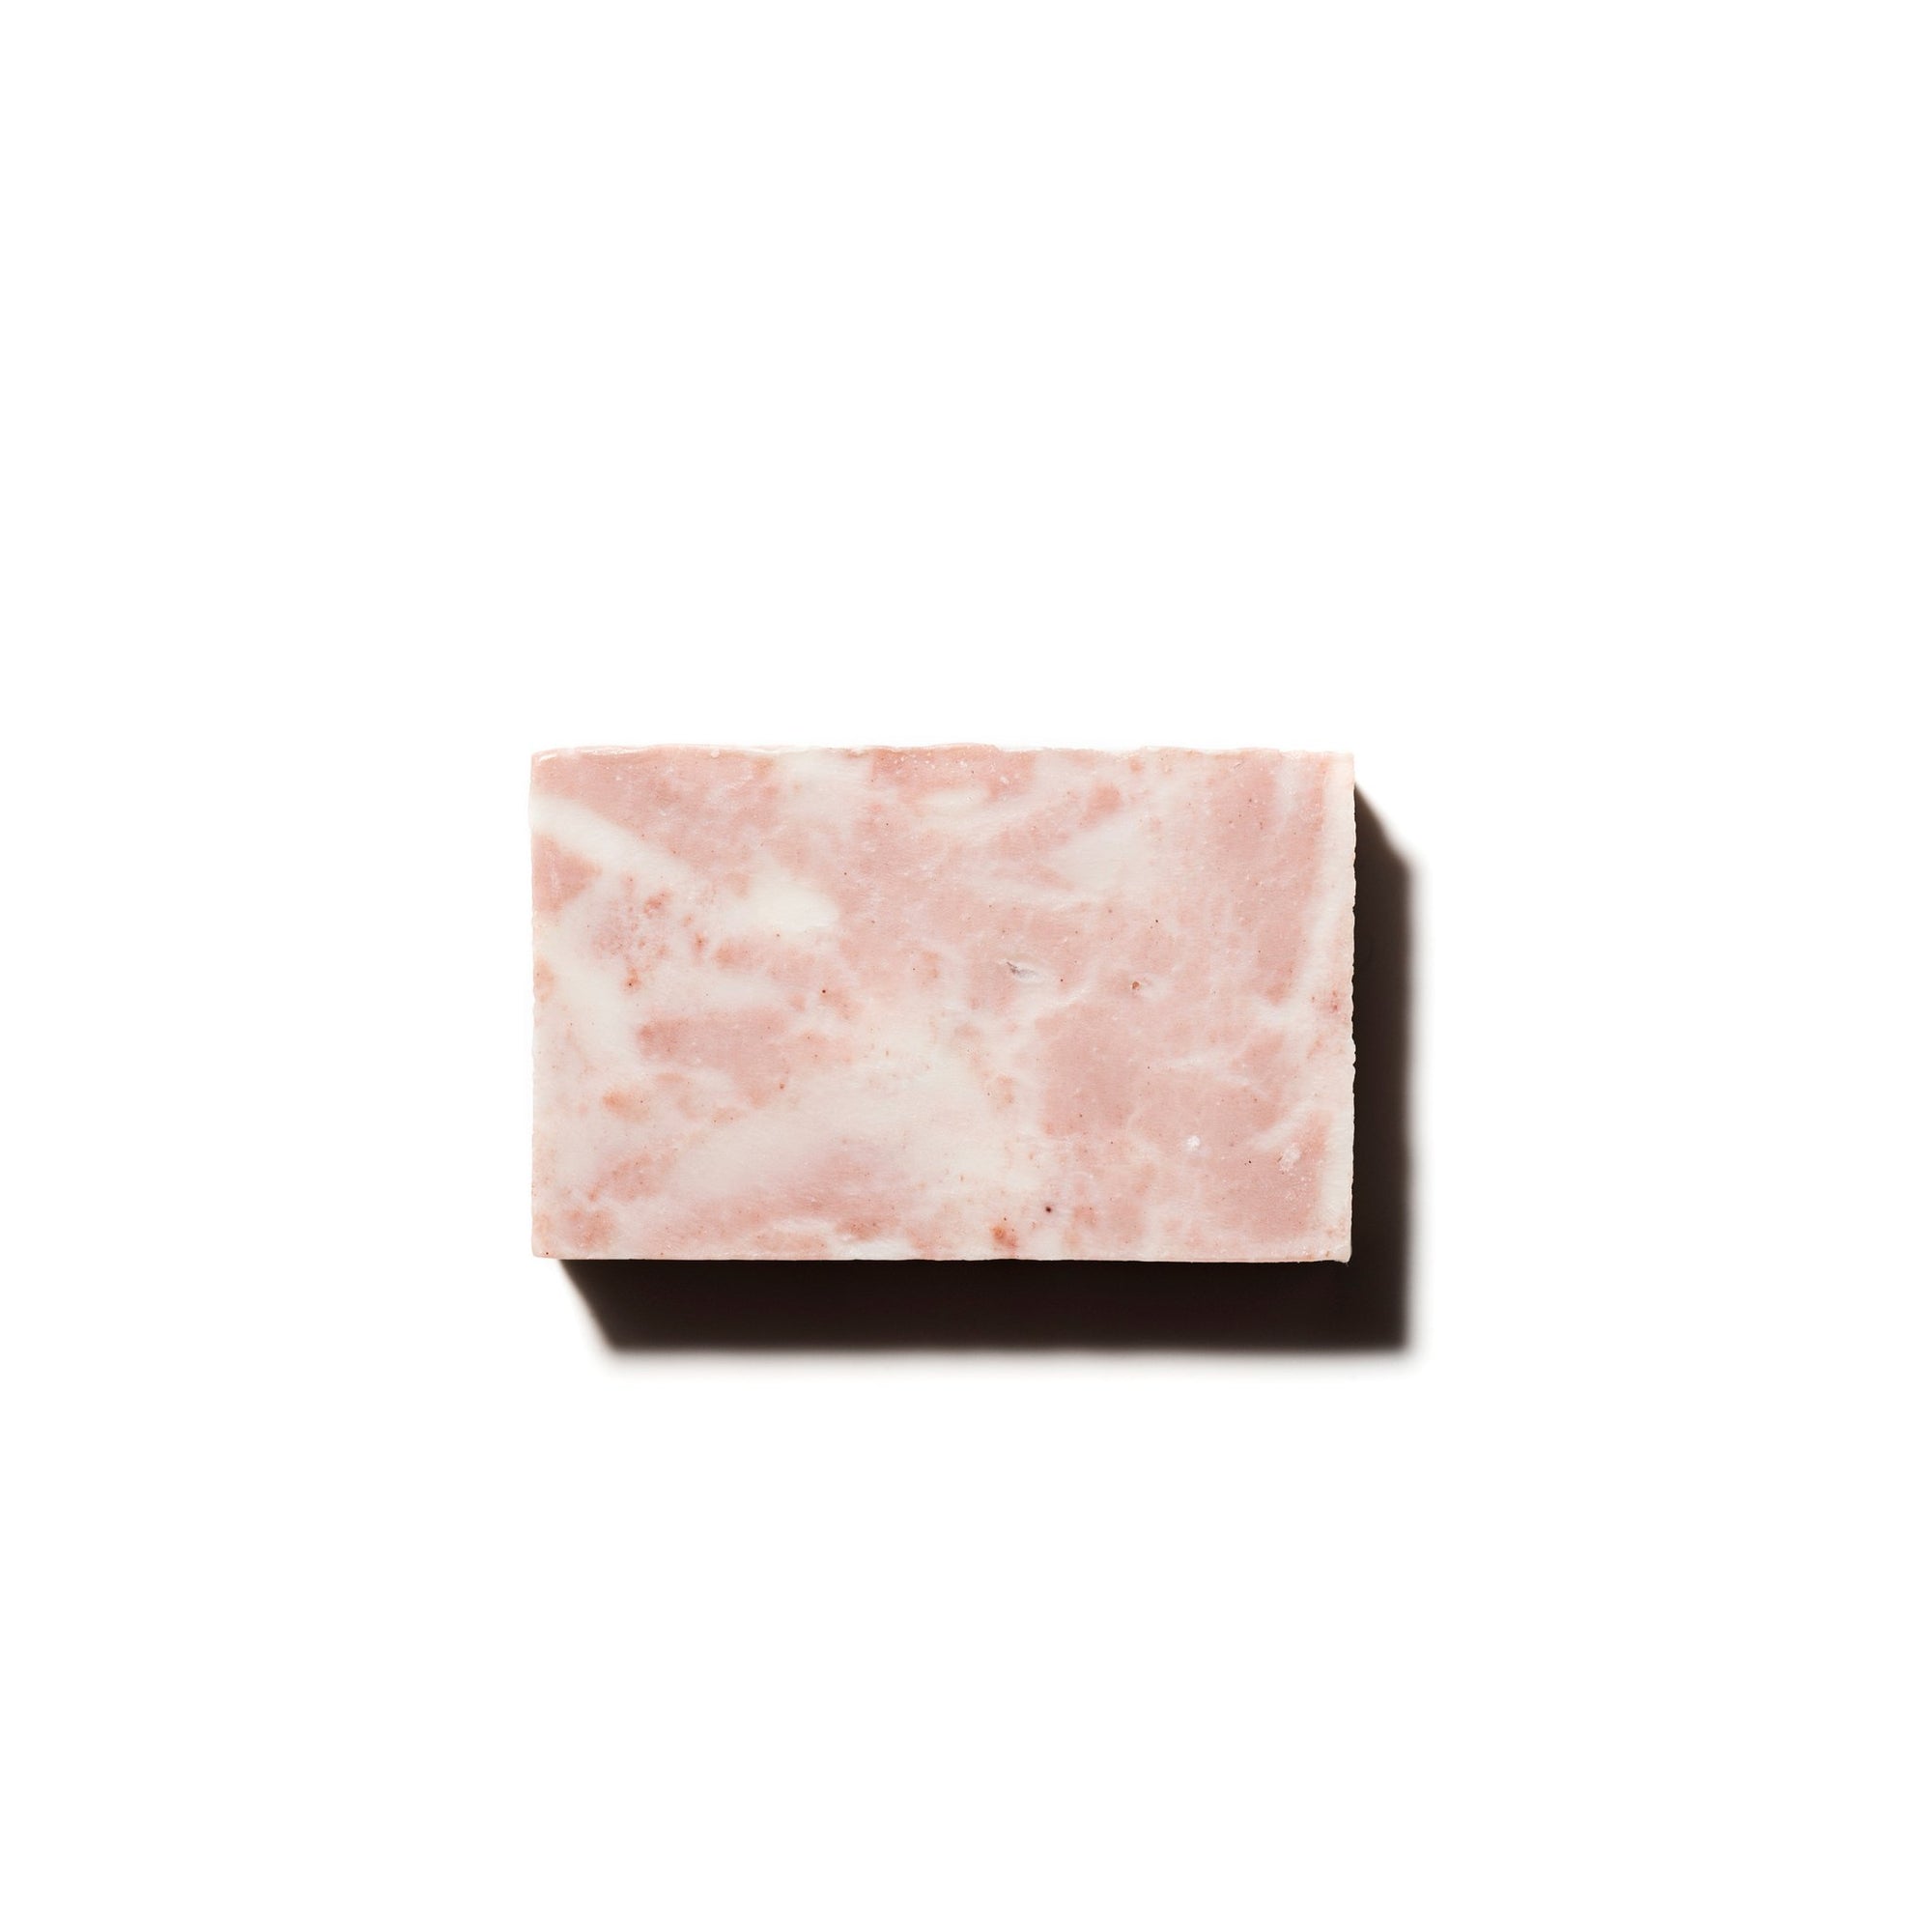 Sade Baron - Sade Baron La Rose Pink Clay Body Bar - ORESTA clean beauty simplified